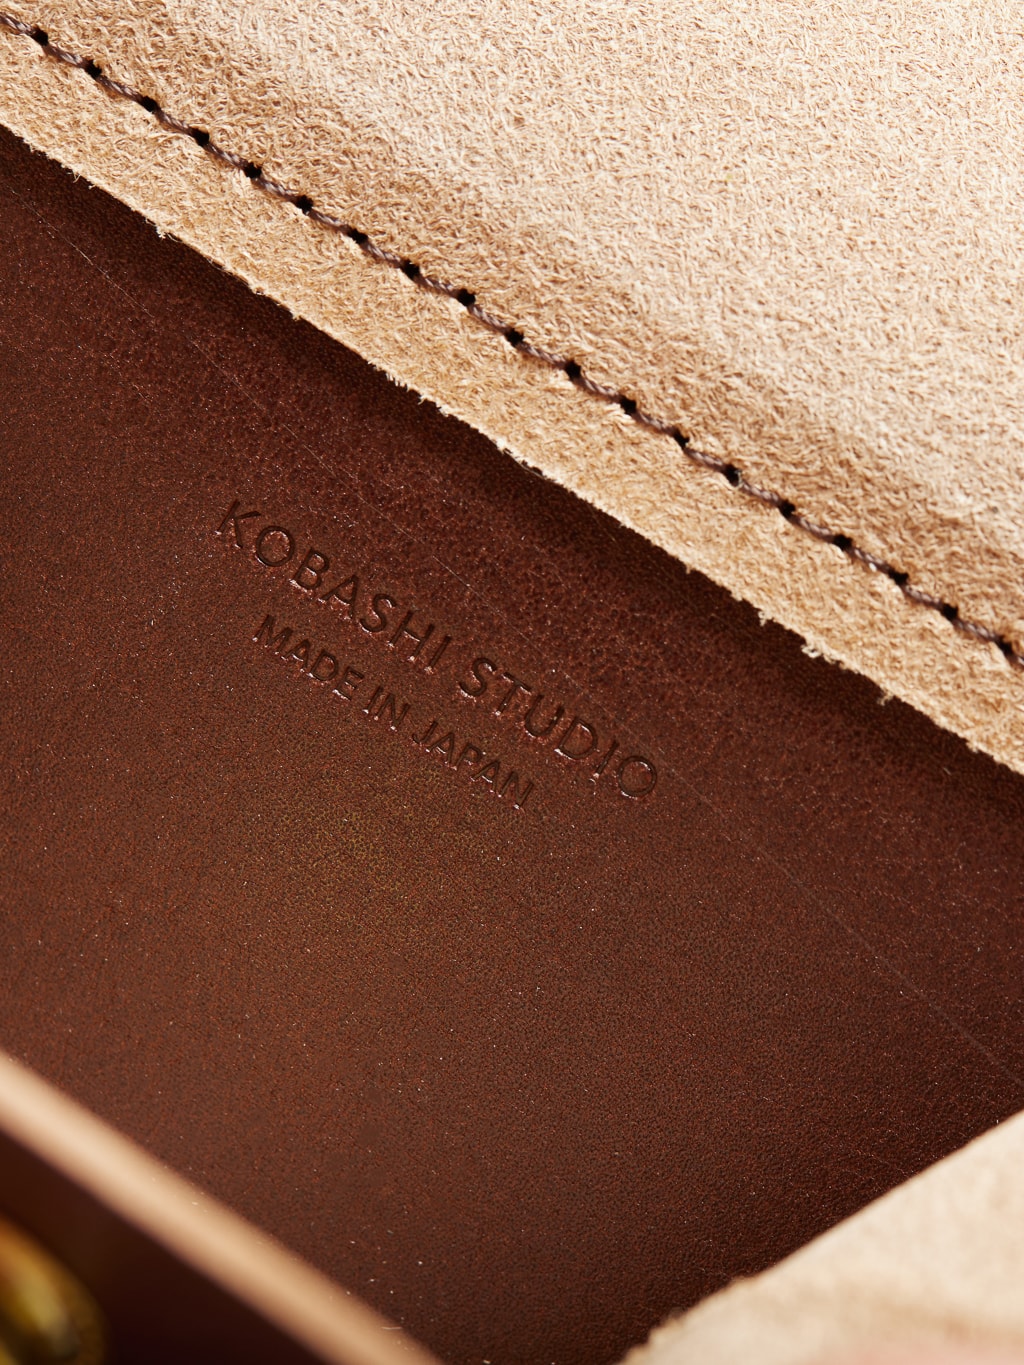 Kobashi Studio Leather Card Case brown interior fabric